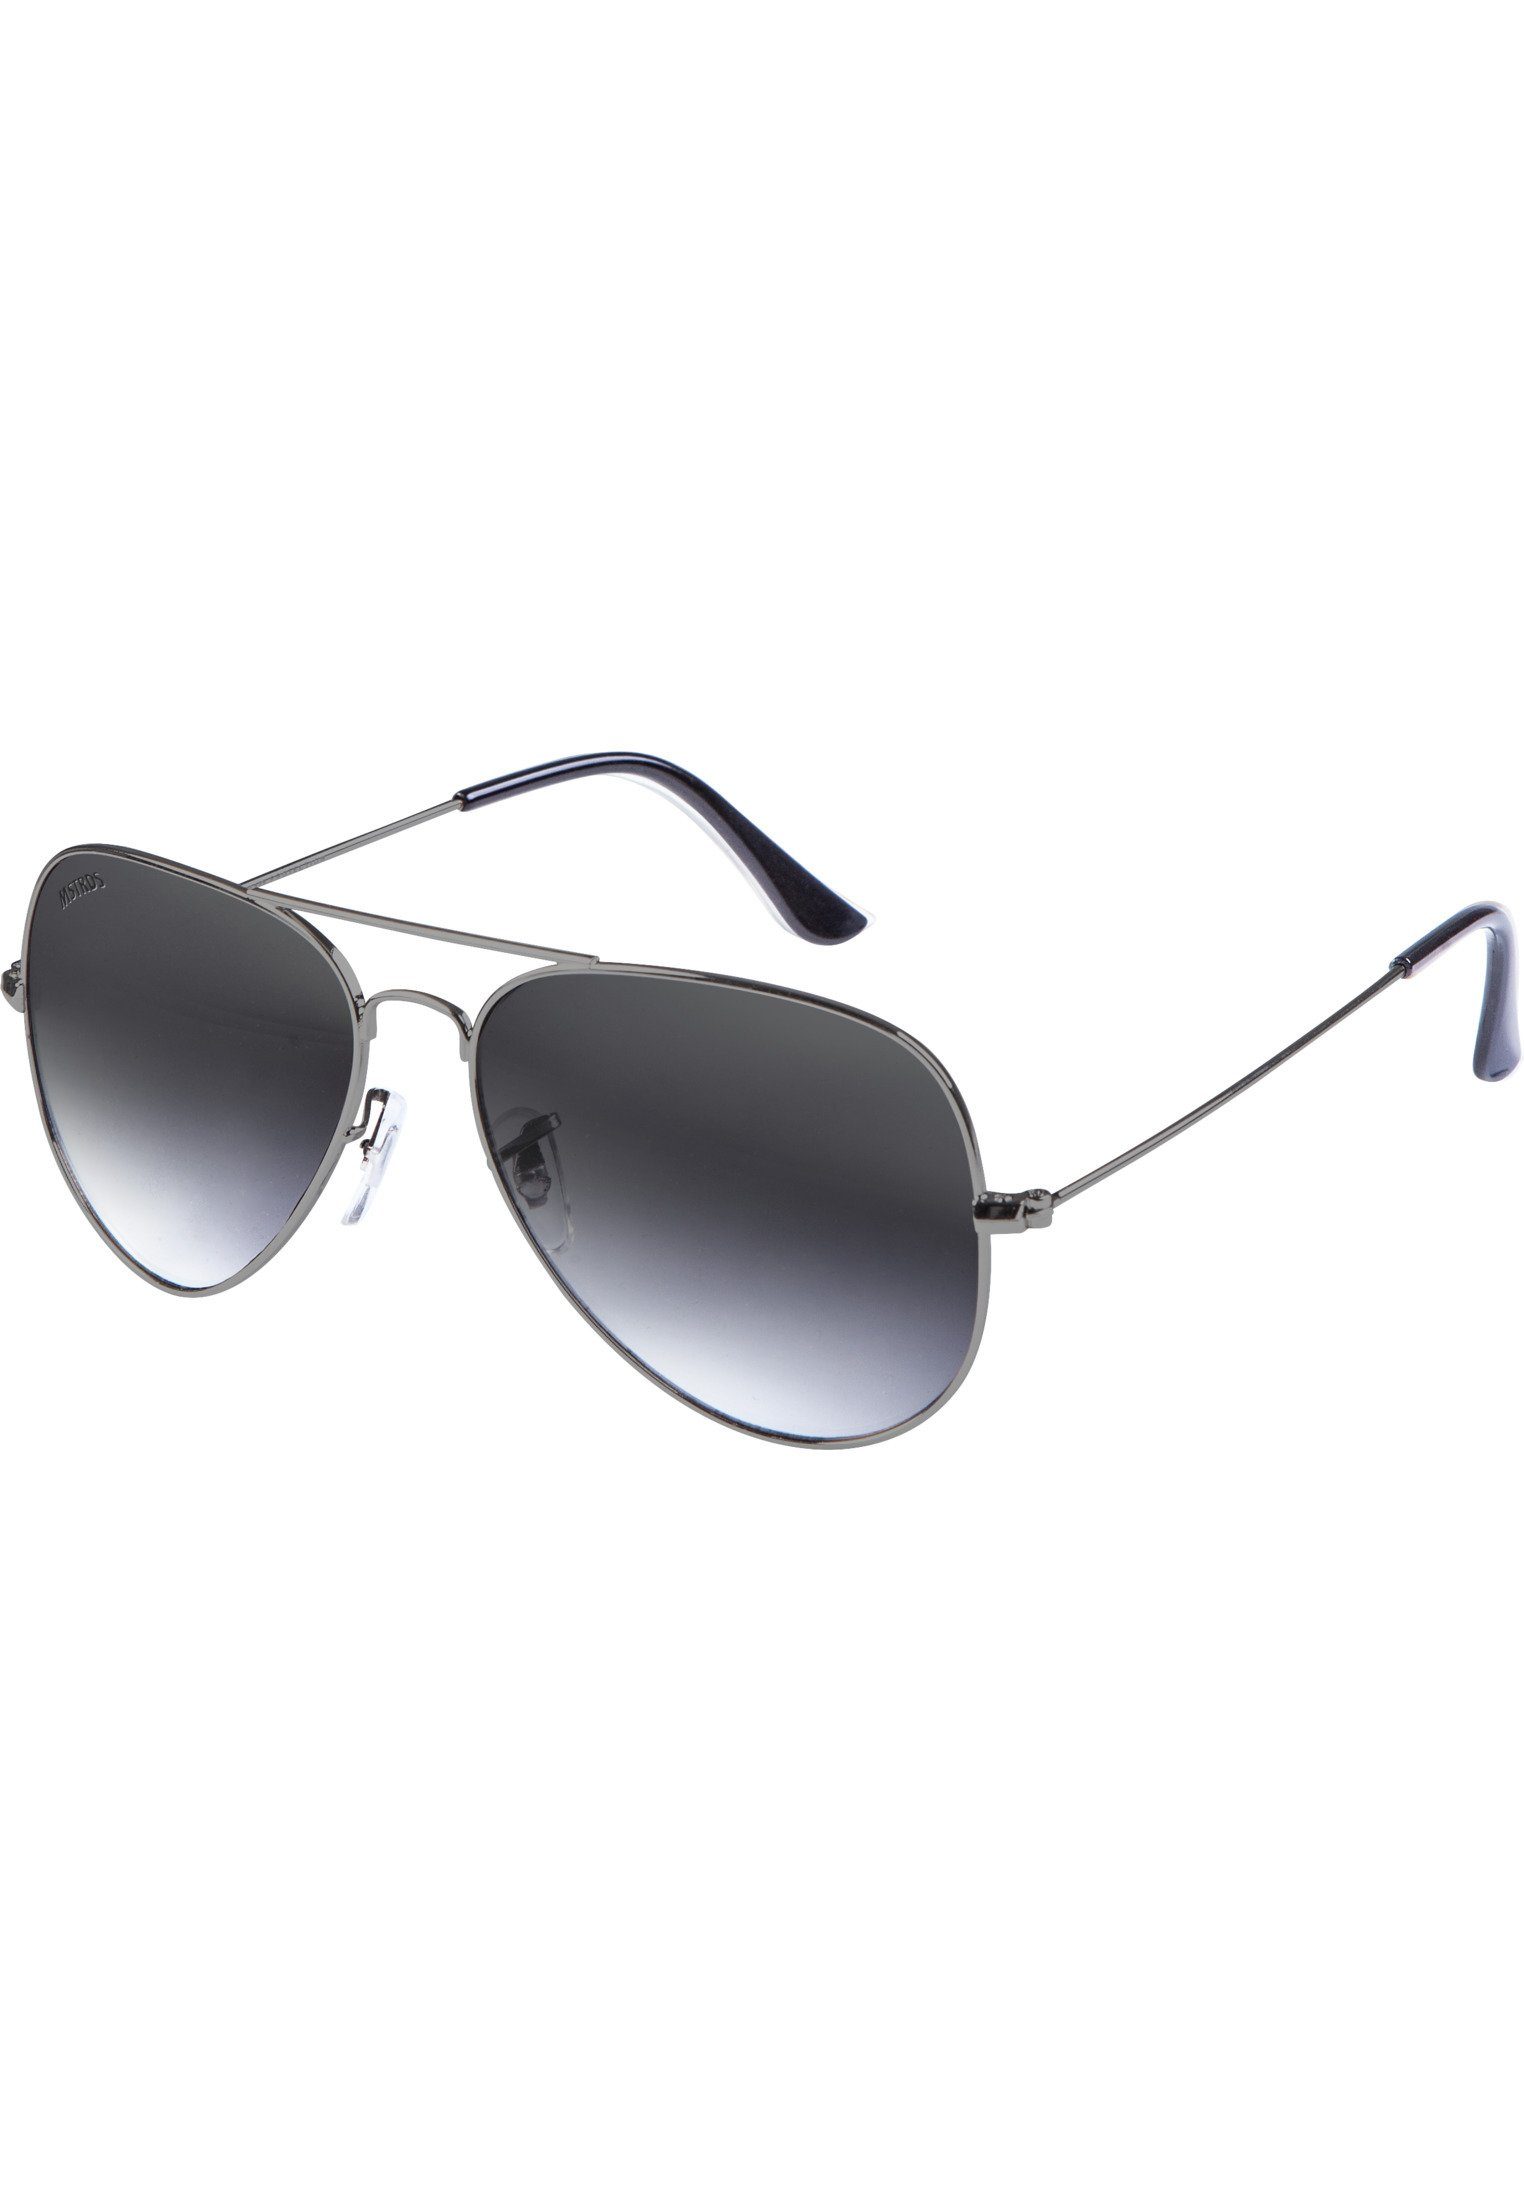 Accessoires PureAv Sonnenbrille gun/grey Sunglasses MSTRDS